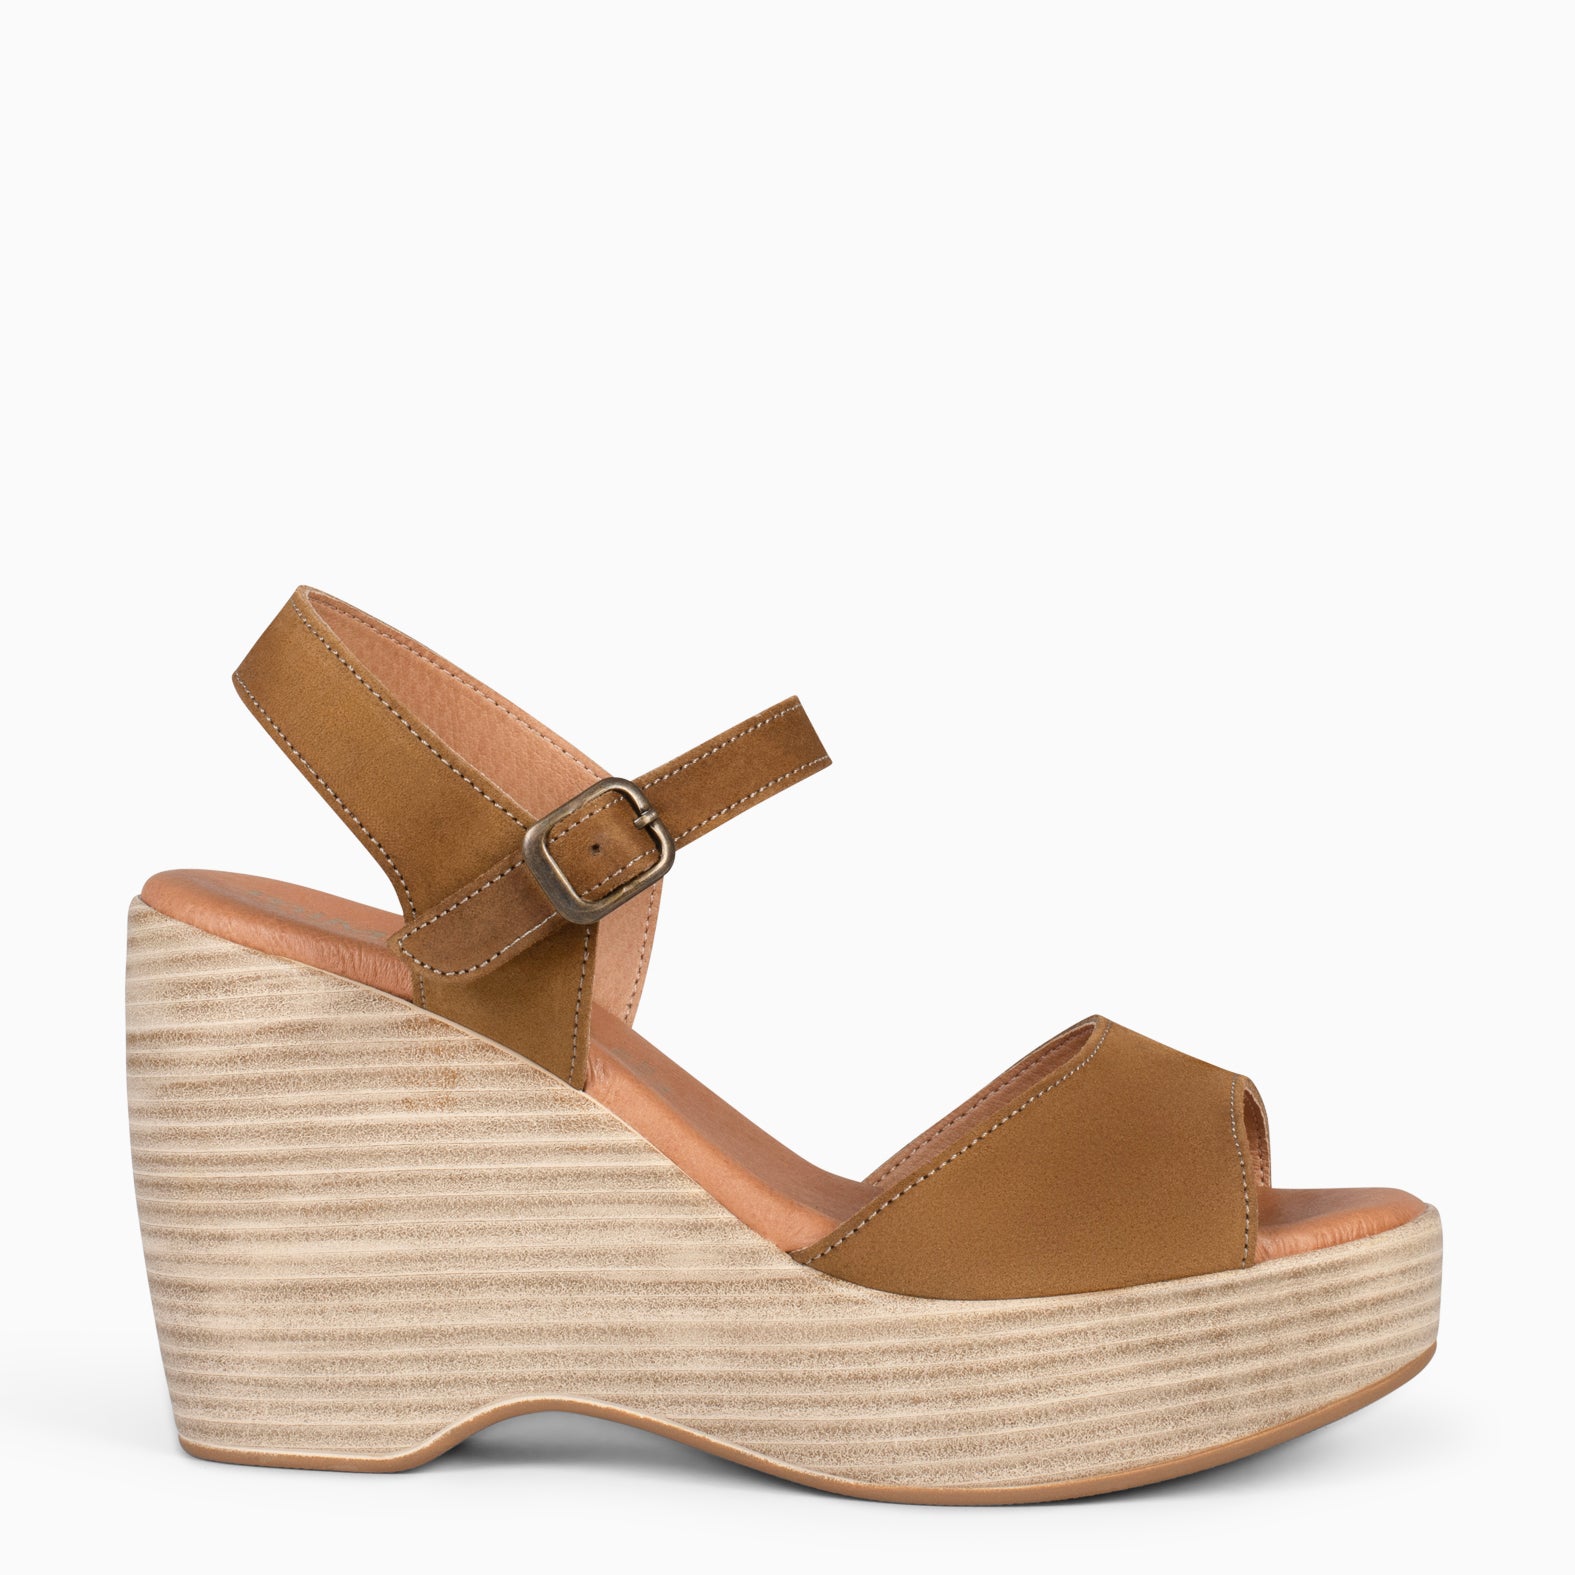 SIDNEY – BROWN wedge sandals